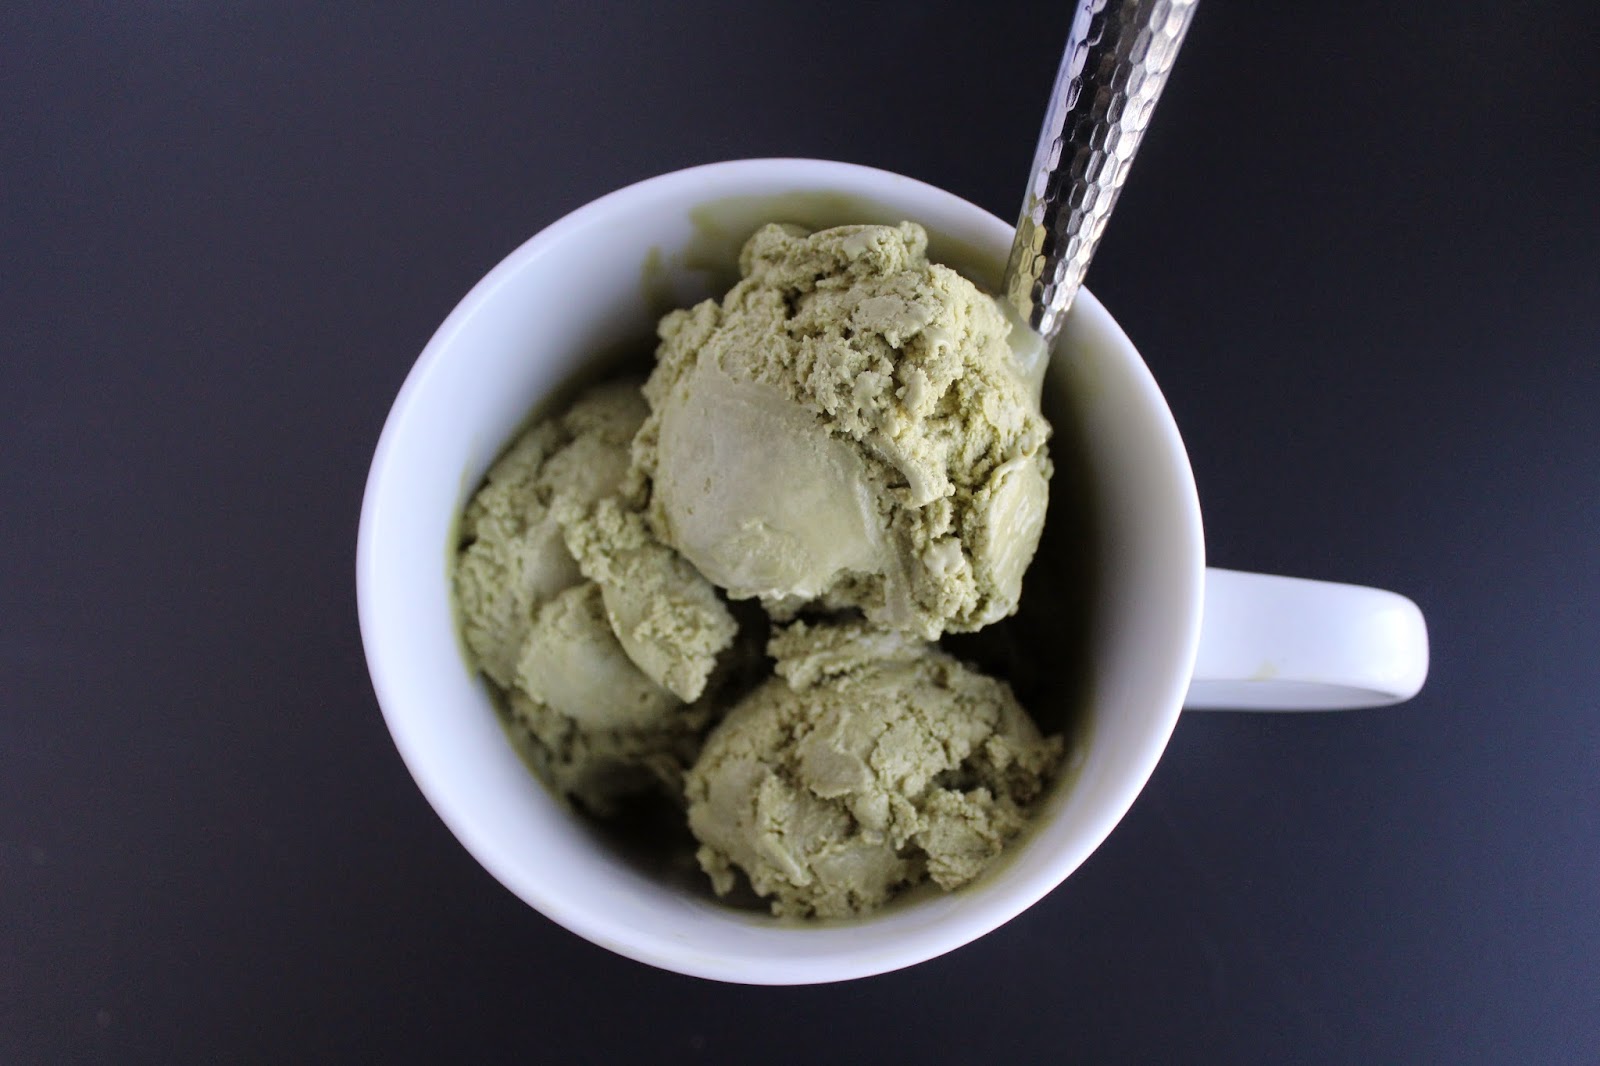 Image of Green Monster Tea Ice Cream.